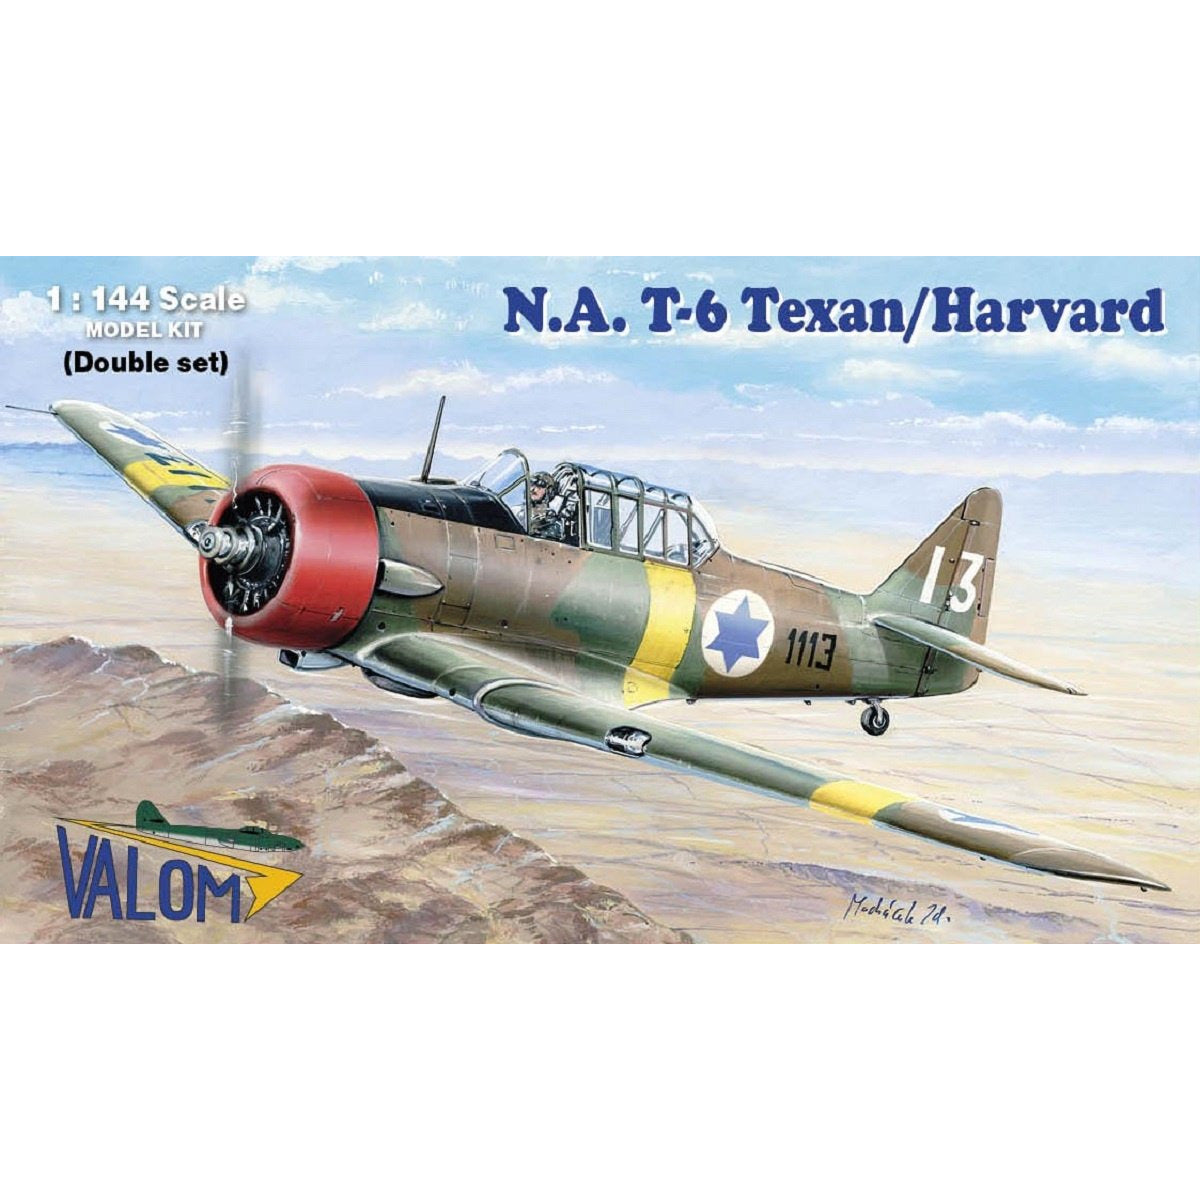 T-6 Texan/Harvard Double Kit 1/144 by Valom